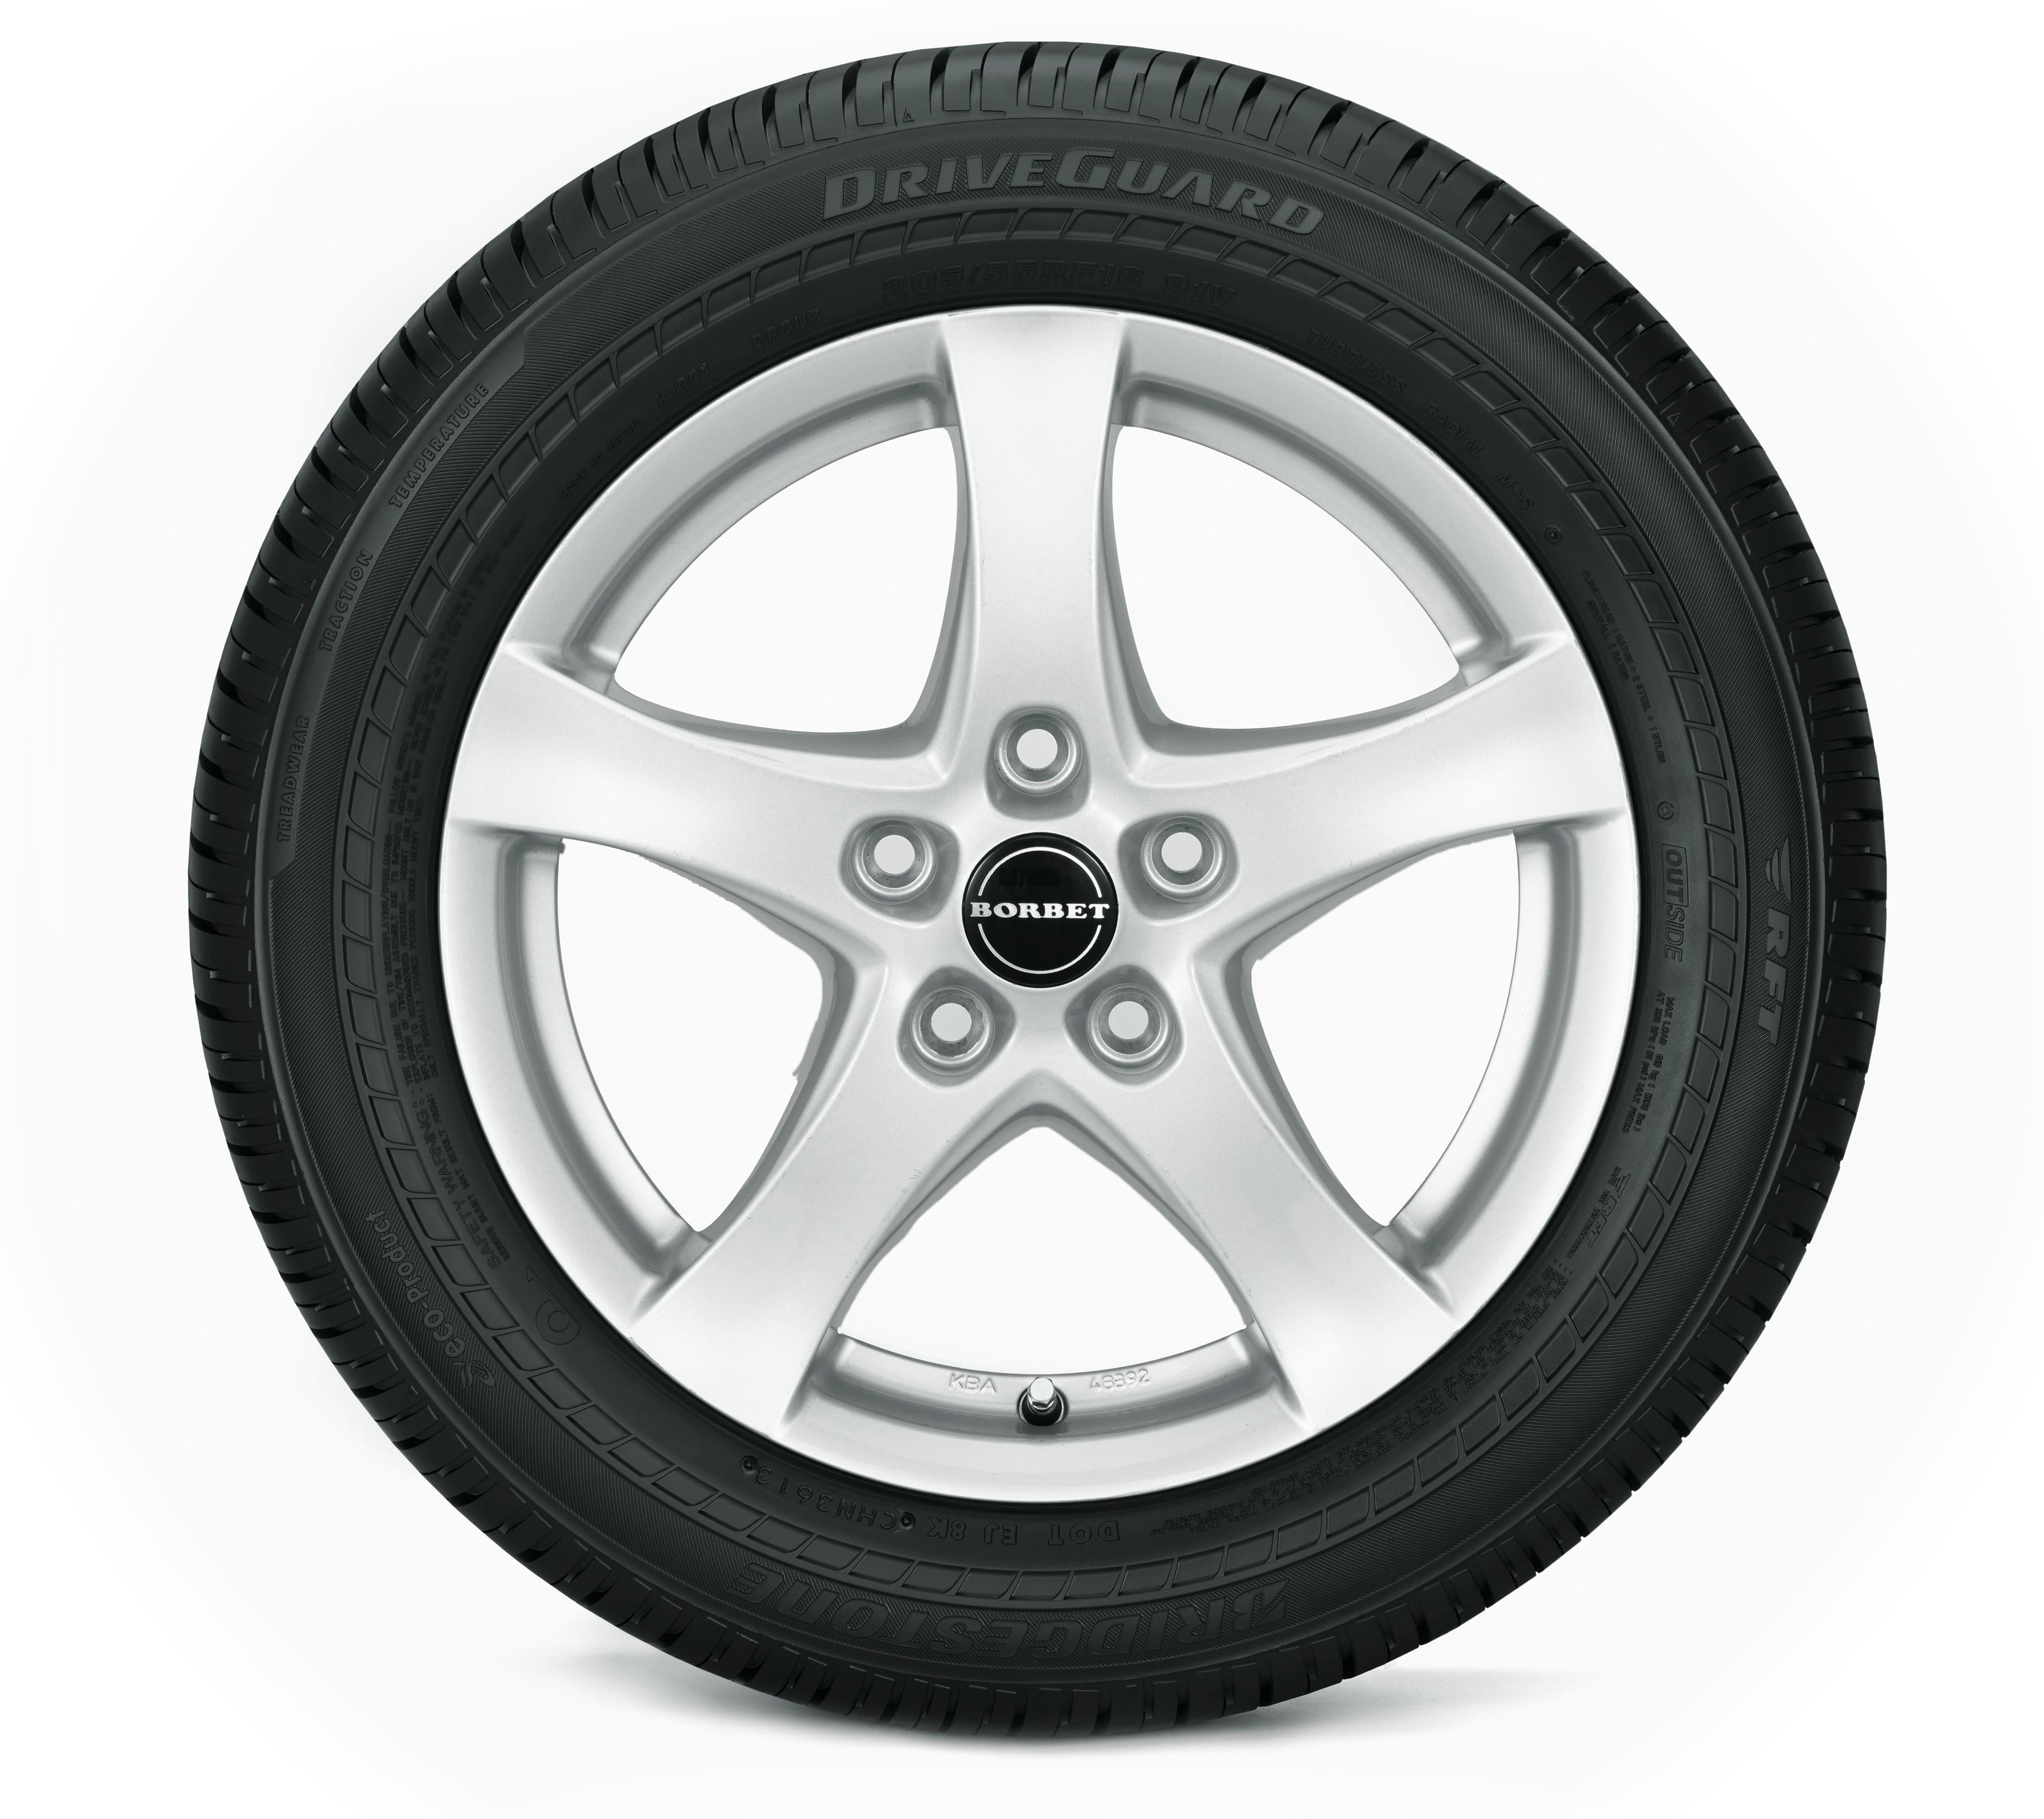 Bridgestone DriveGuard 225/60R16 RF 98V A/S Performance Tire